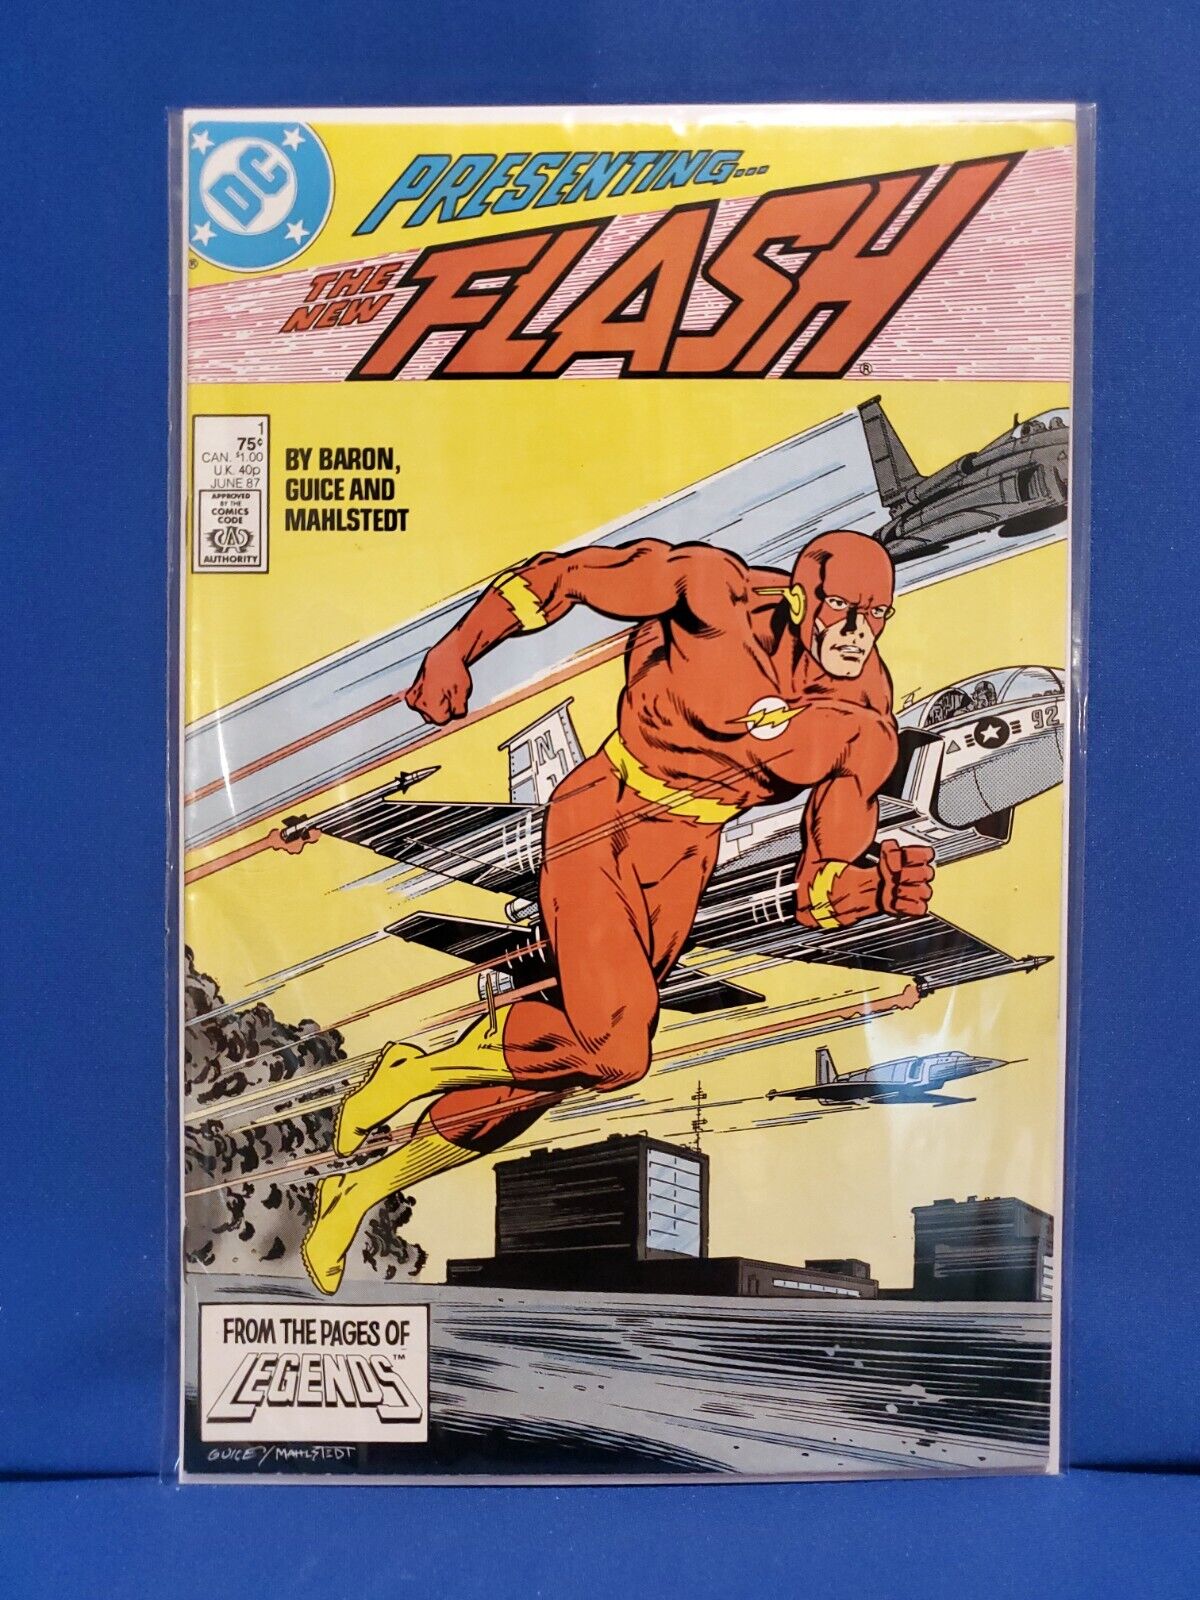 ⚡ ⚡ The Flash Vol. 2 #1 - DC - 1987 – SHIPS FREE ⚡ ⚡